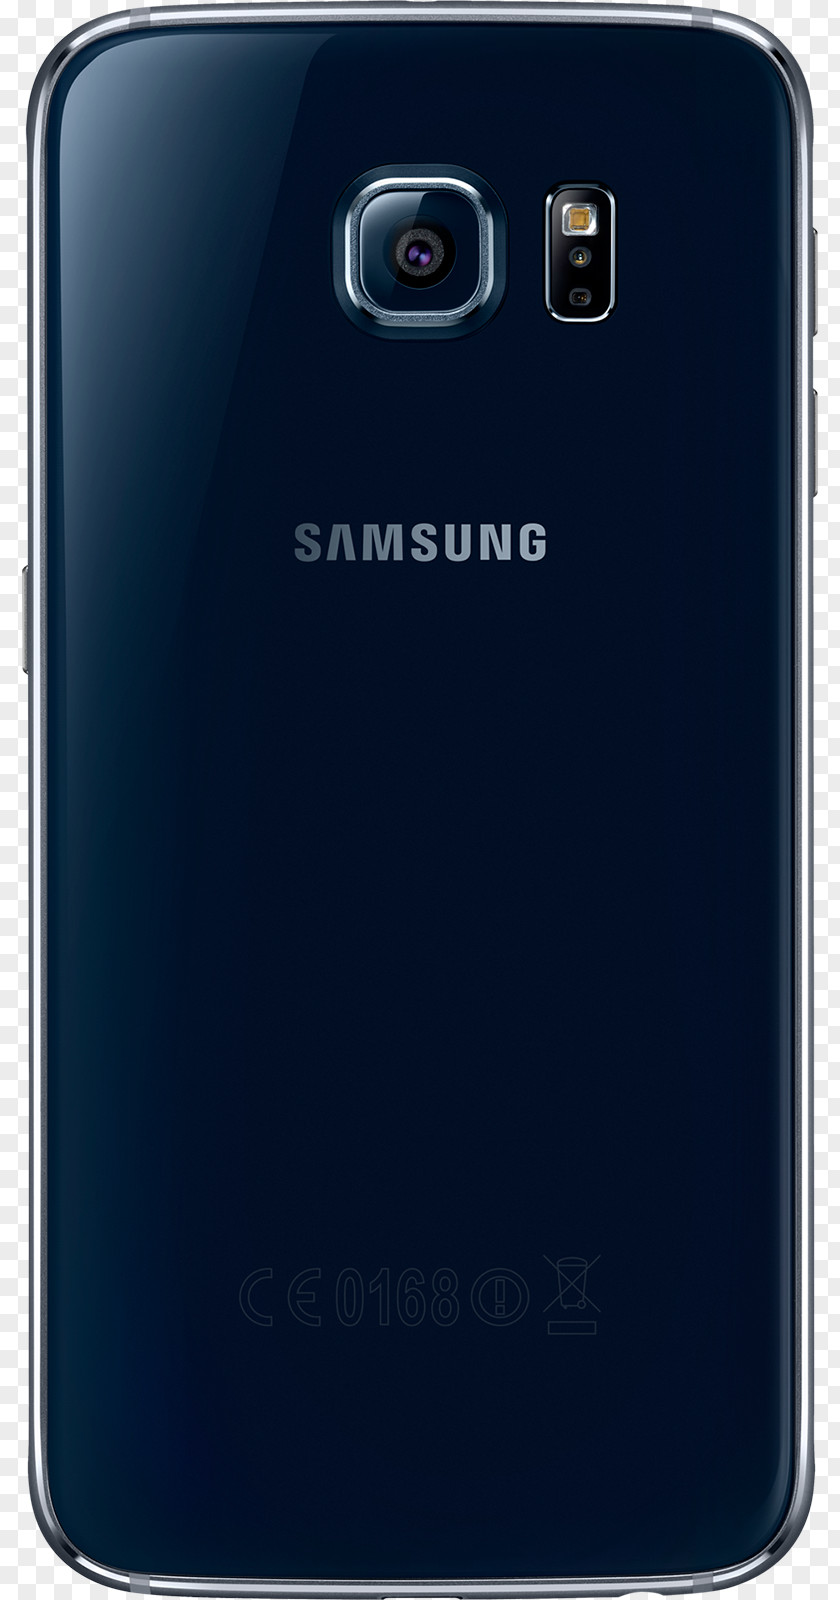 S6edga Samsung Galaxy S6 Edge Telephone Black Sapphire Smartphone PNG